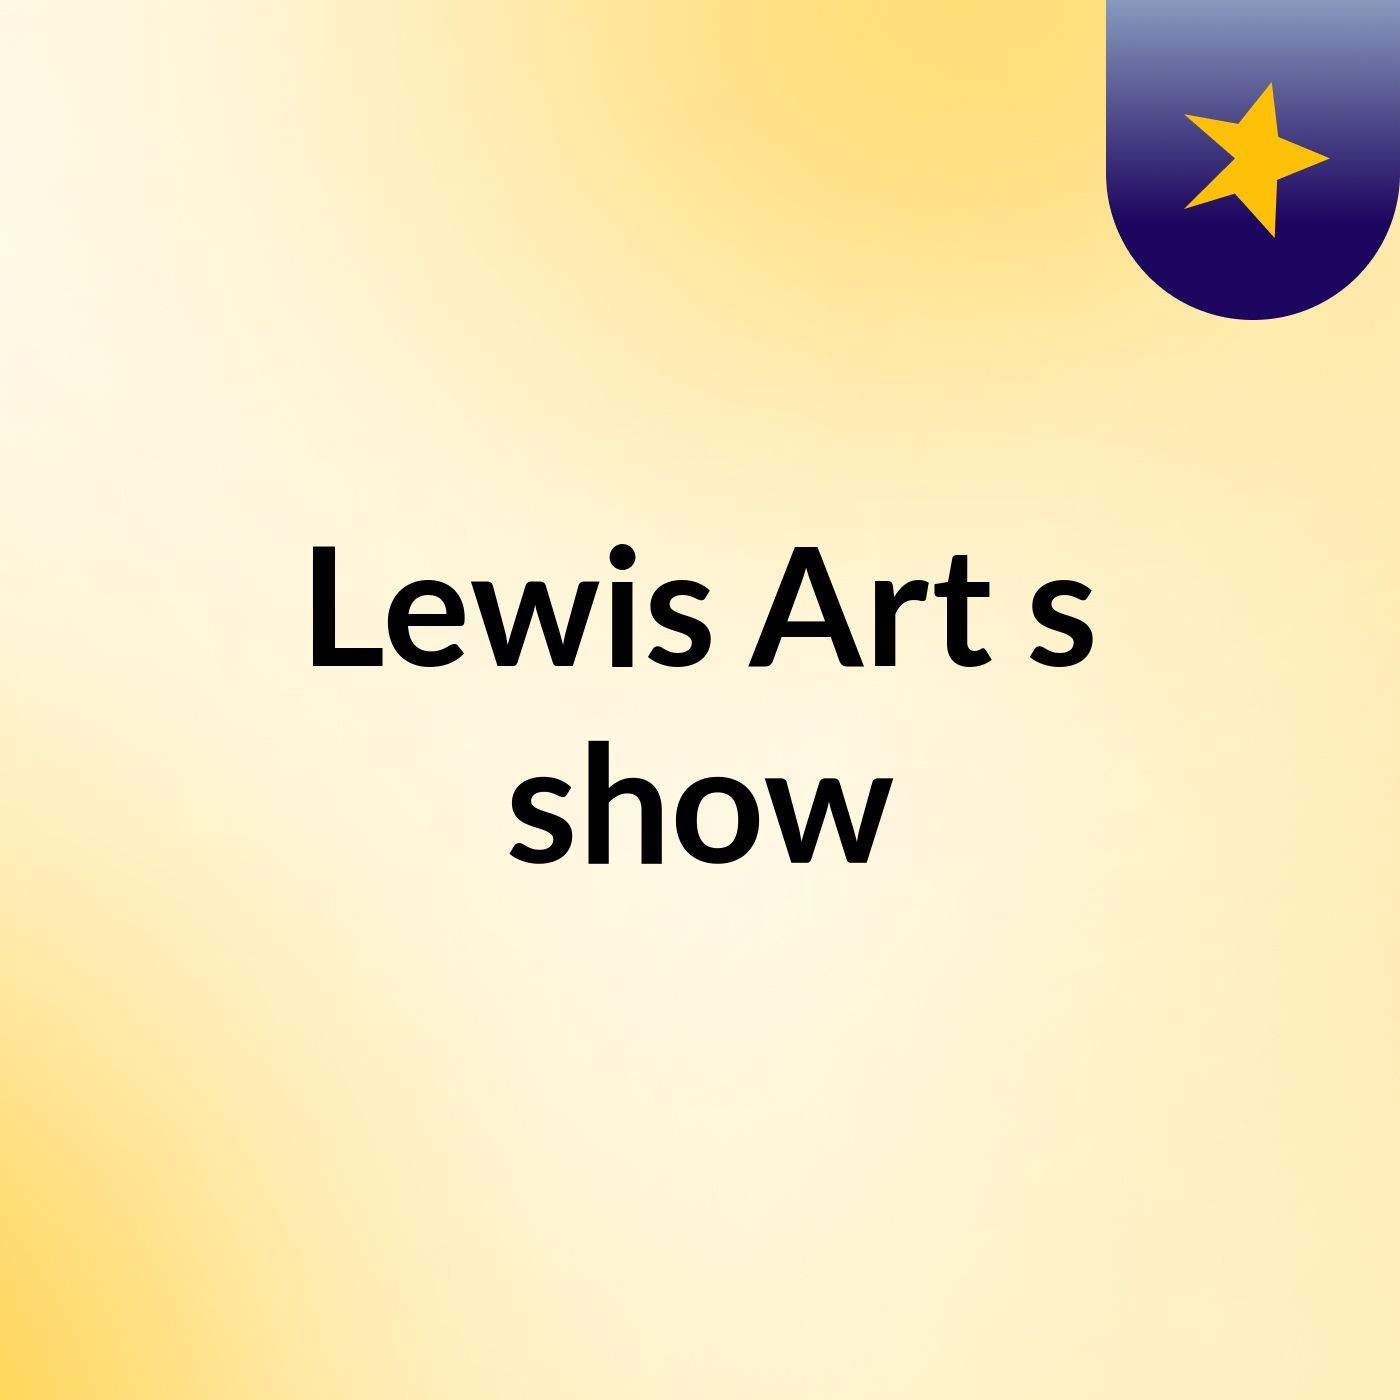 Lewis Art's show